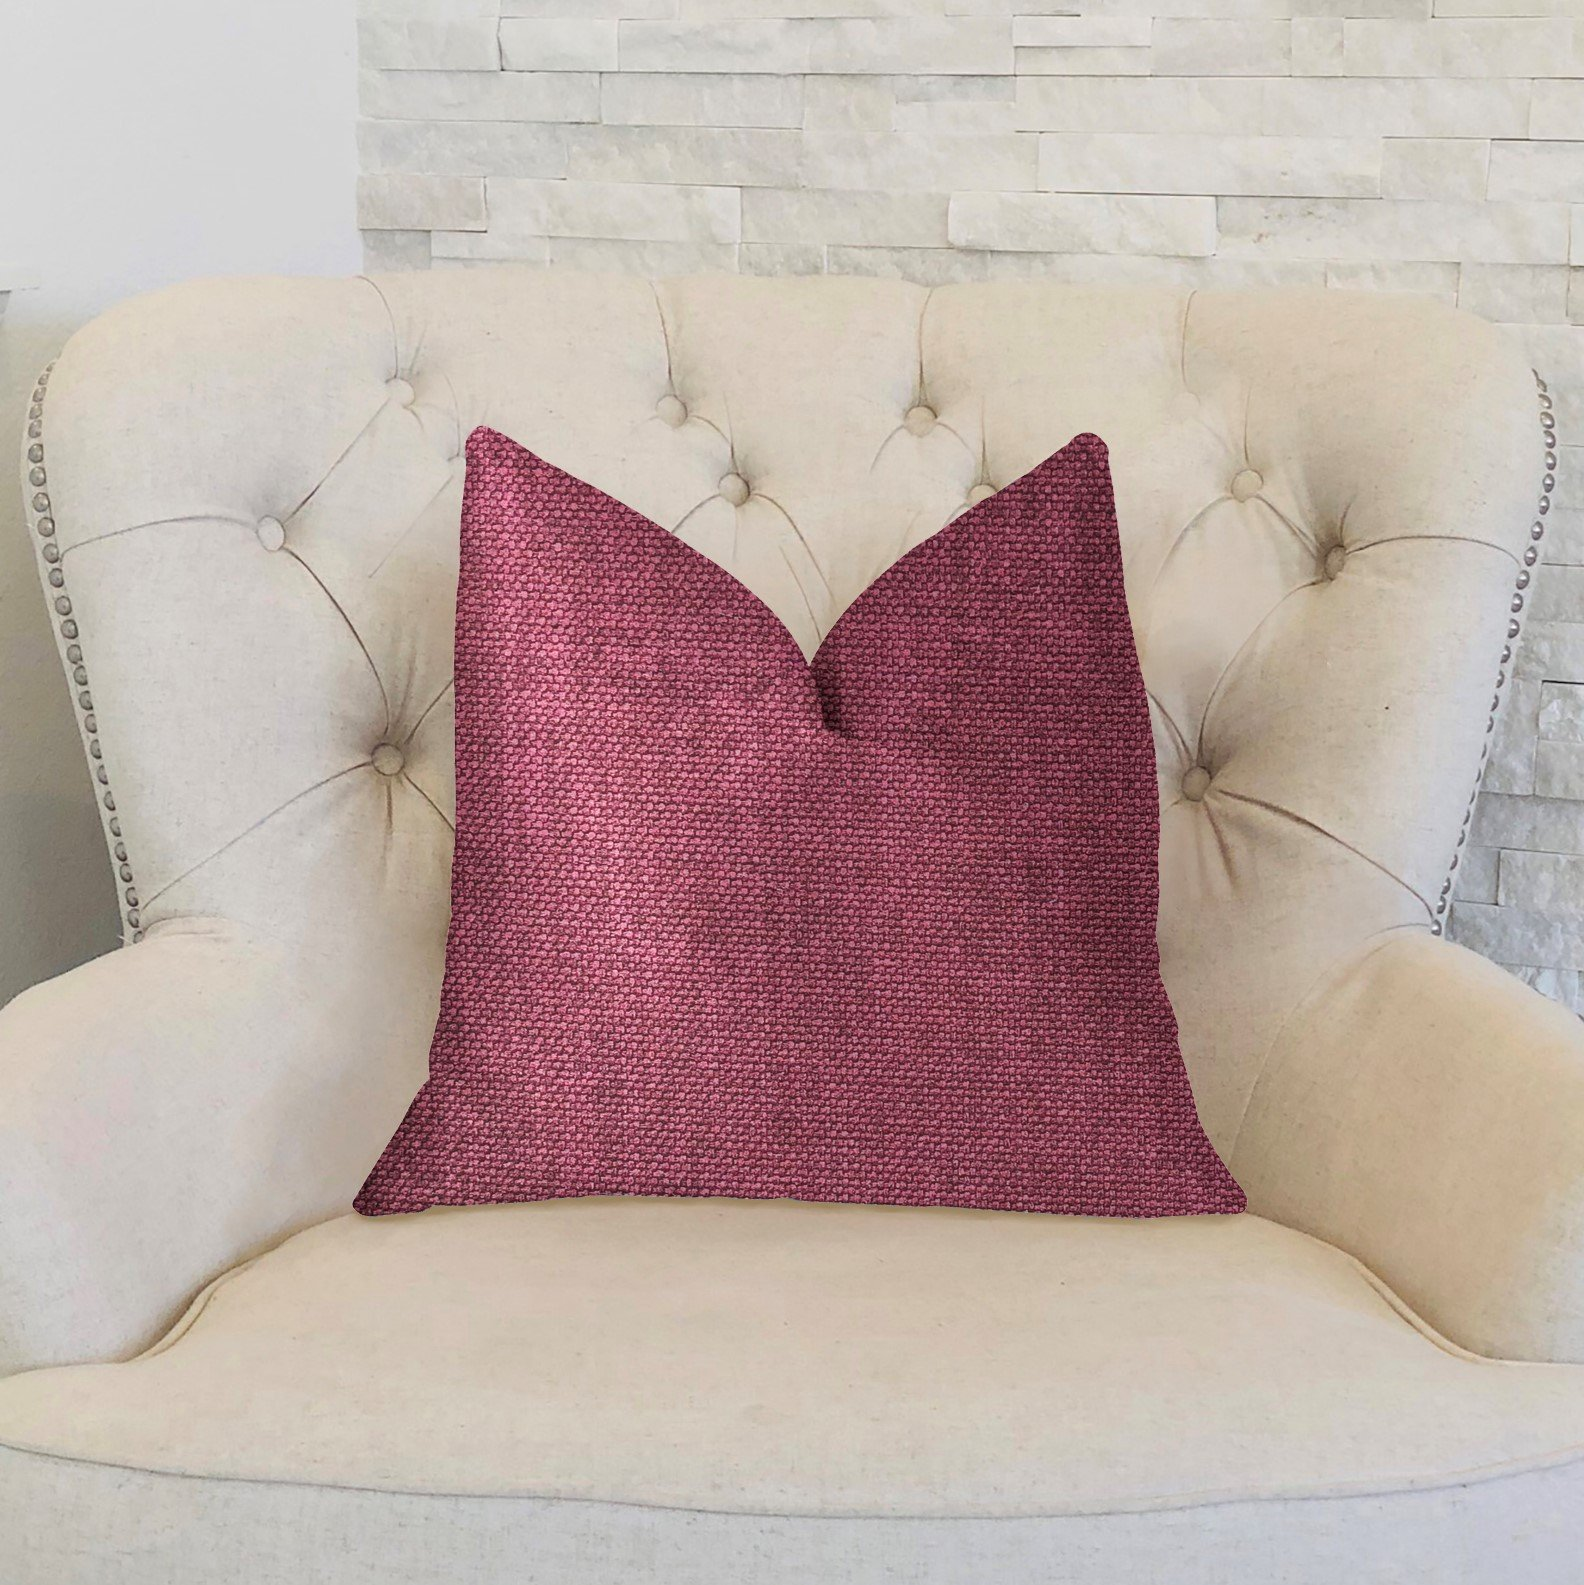 Plumptious Purple Luxury Throw Pillow